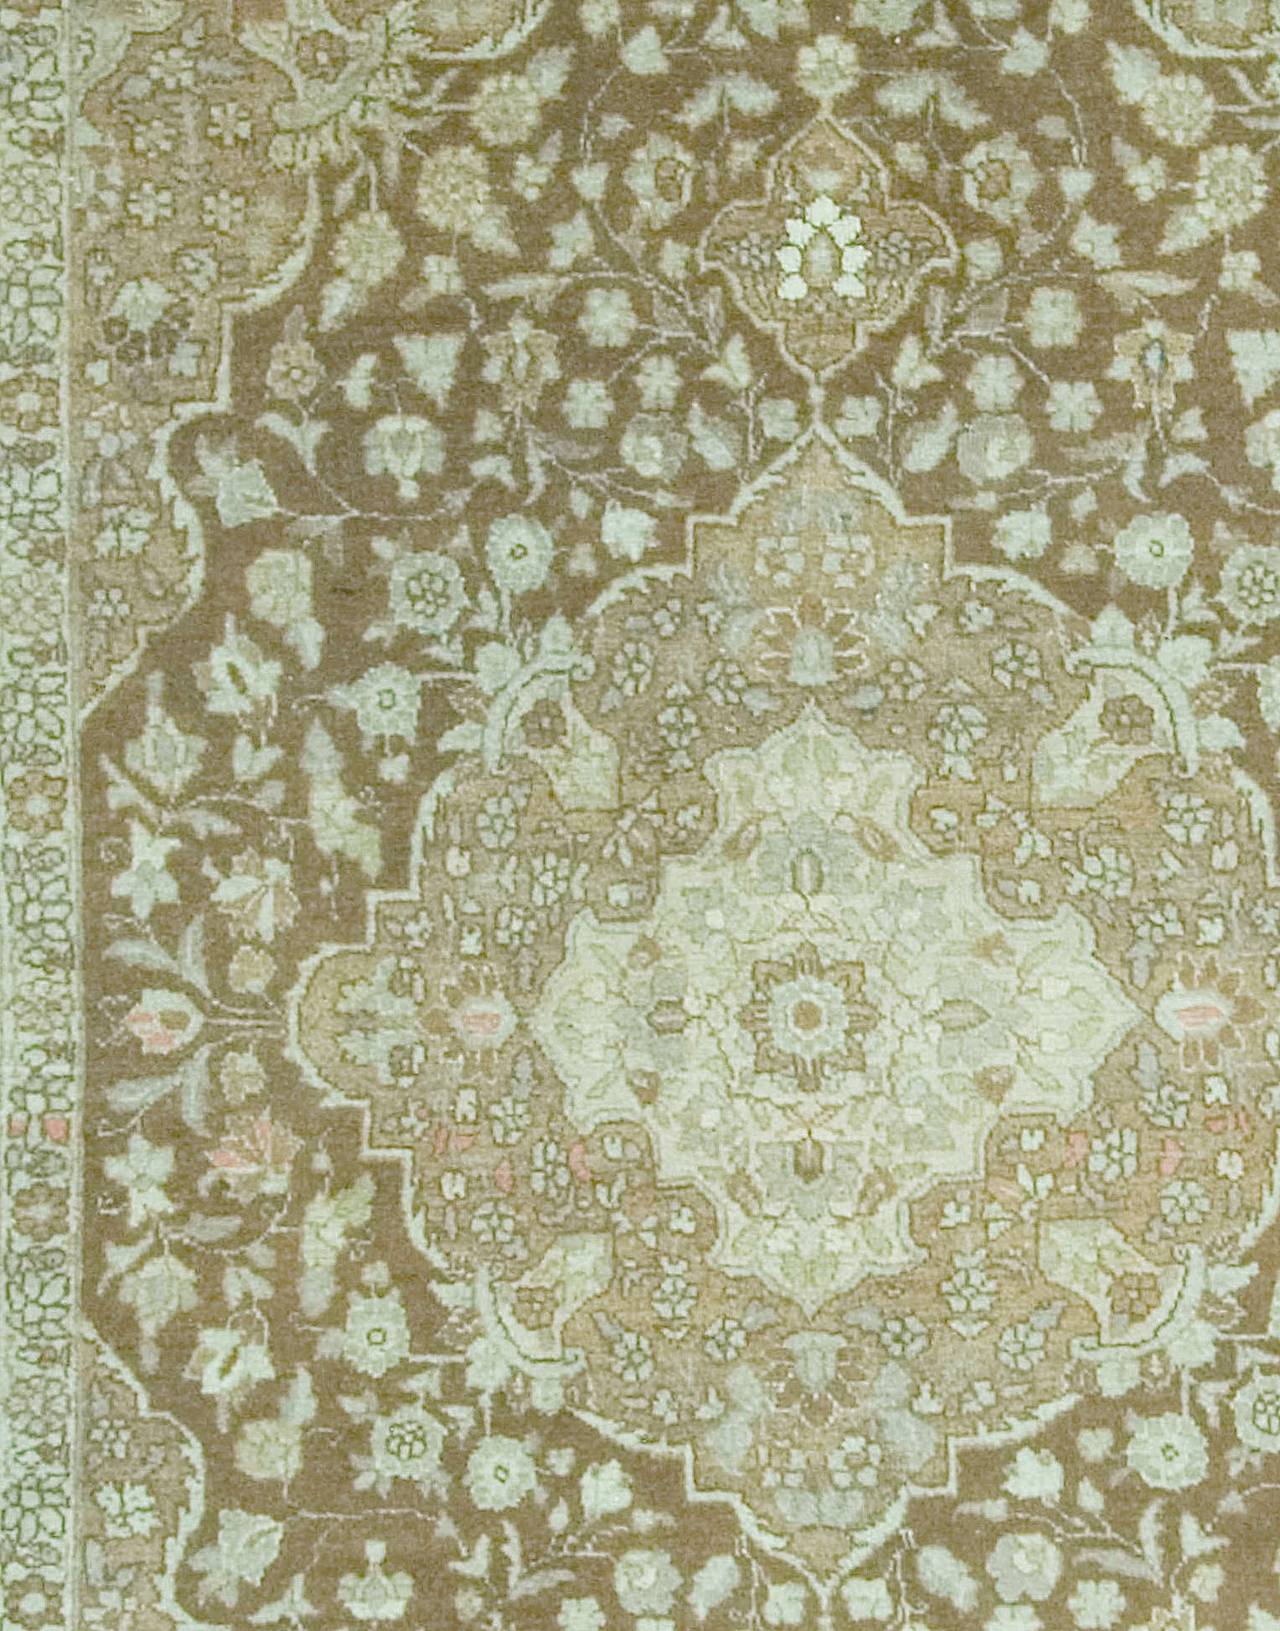 Hand-Woven Antique Persian Tabriz Rug Carpet, circa 1900, 4'4 x 5'9 For Sale